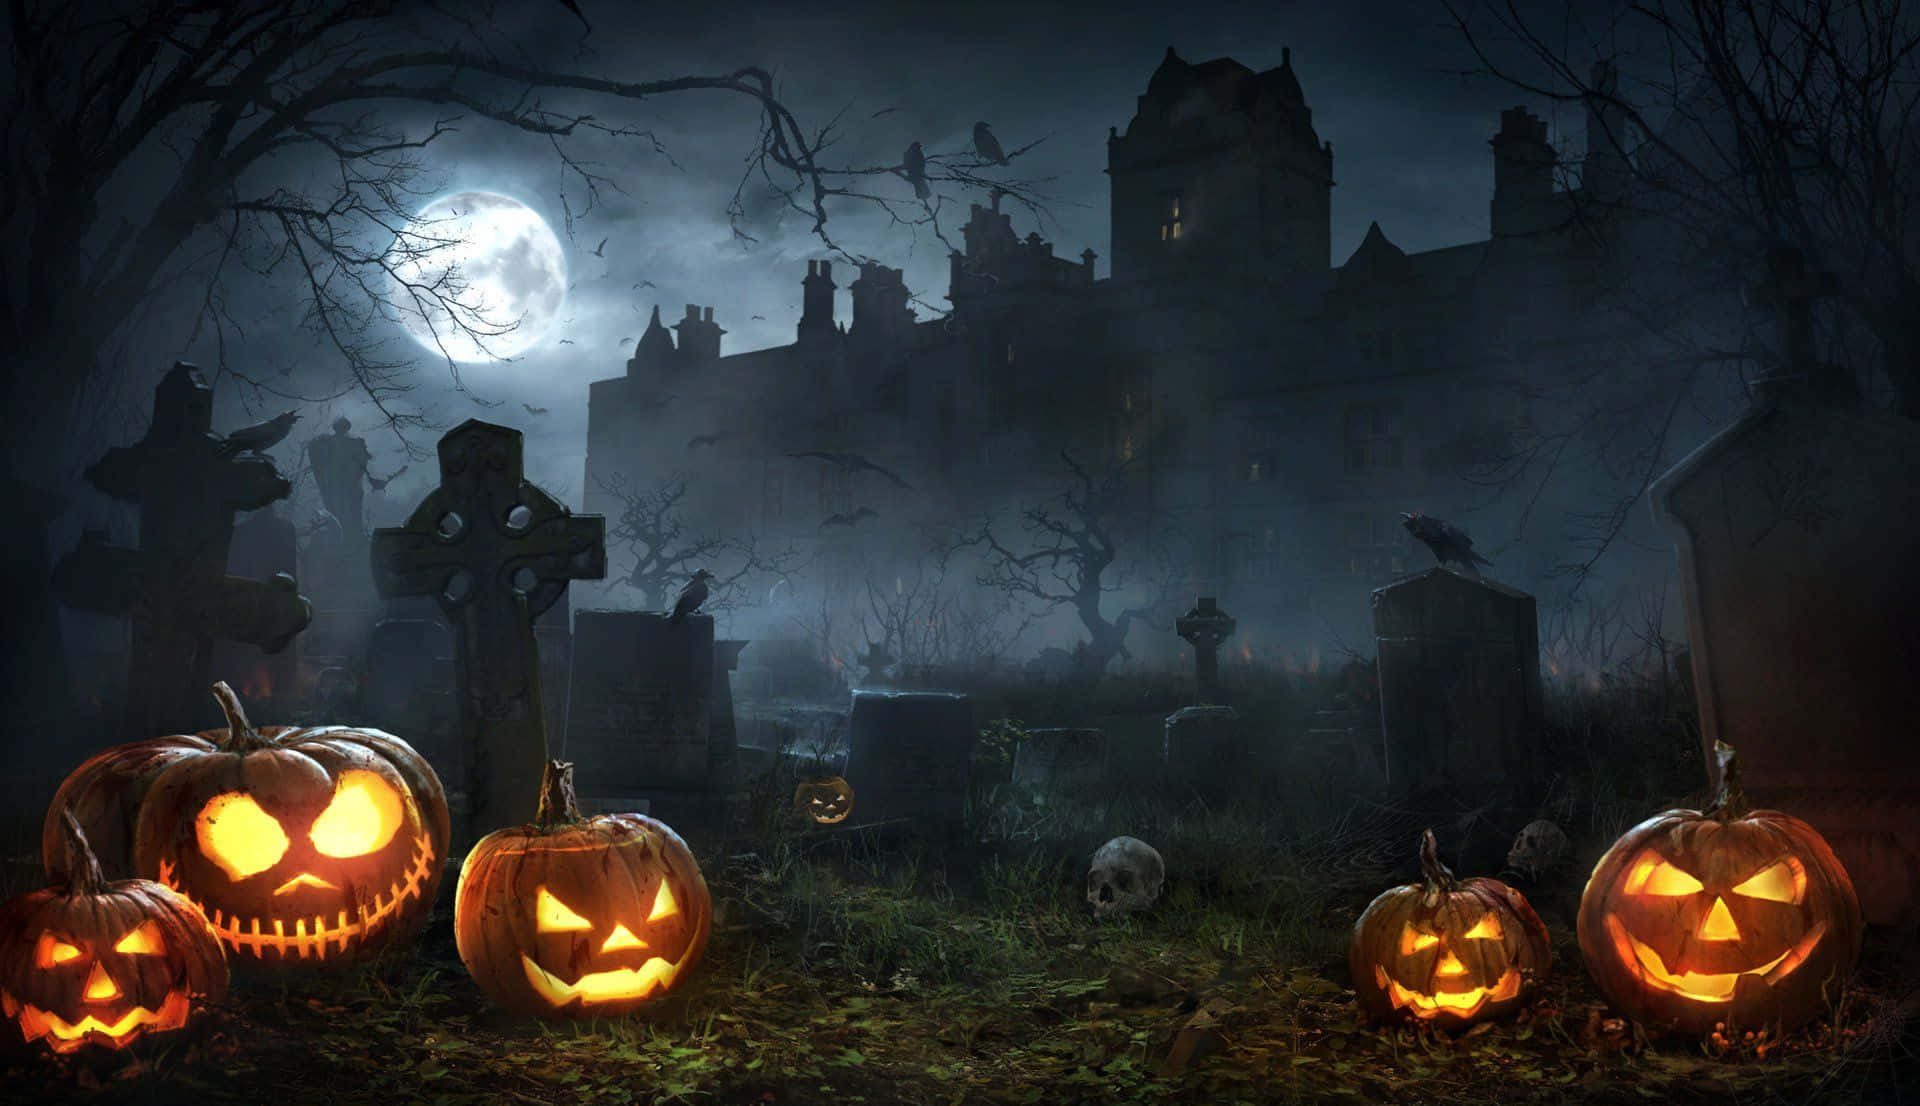 Explore the eerie ambience of an enchanted Halloween graveyard. Wallpaper